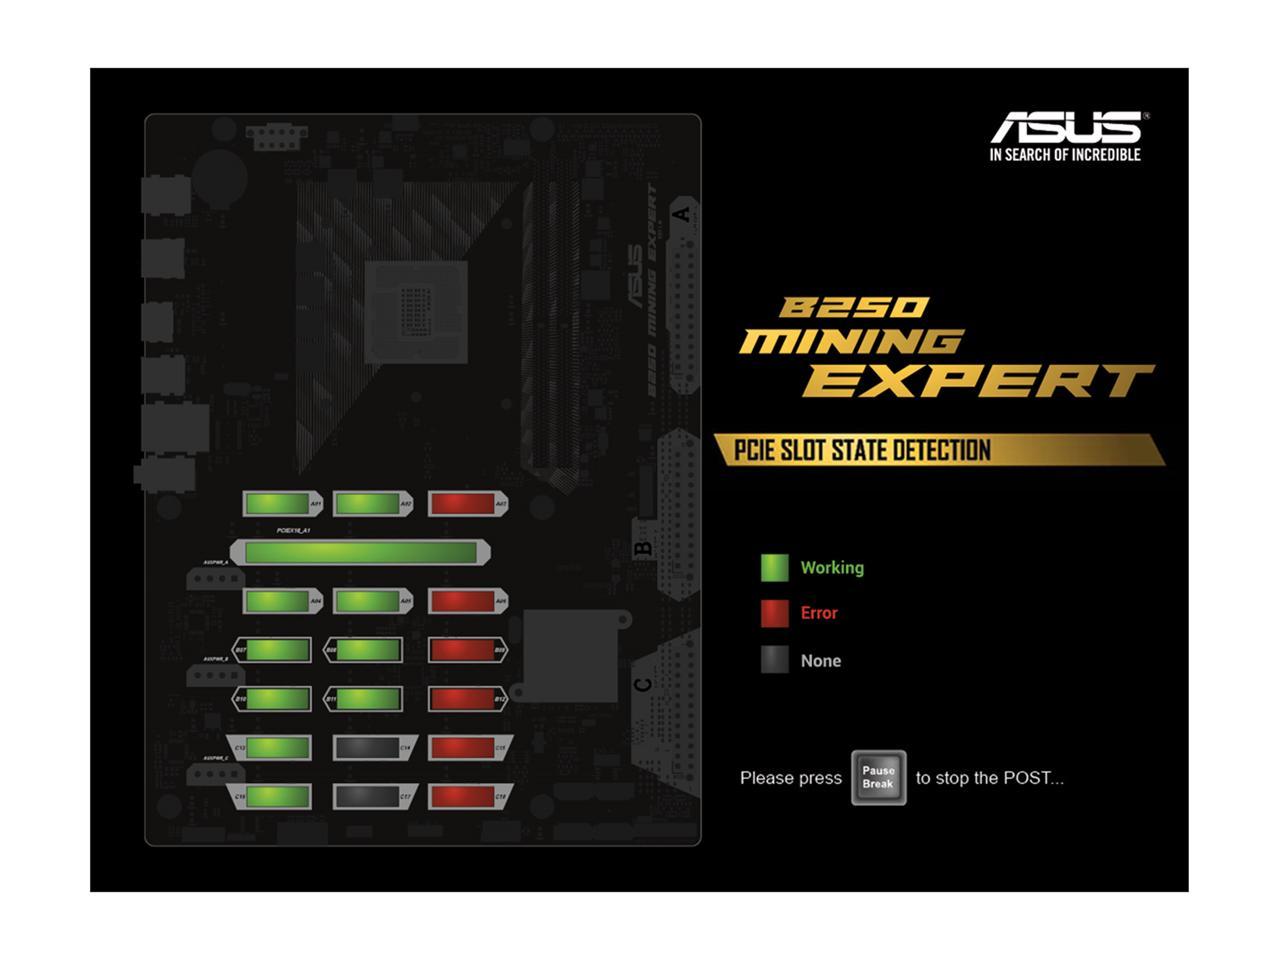 Asus B250 Mining Expert Lga 1151 Intel B250 Hdmi Sata 6Gb/S Usb 3.1 Atx Intel Cryptocurrency Mining Motherboard